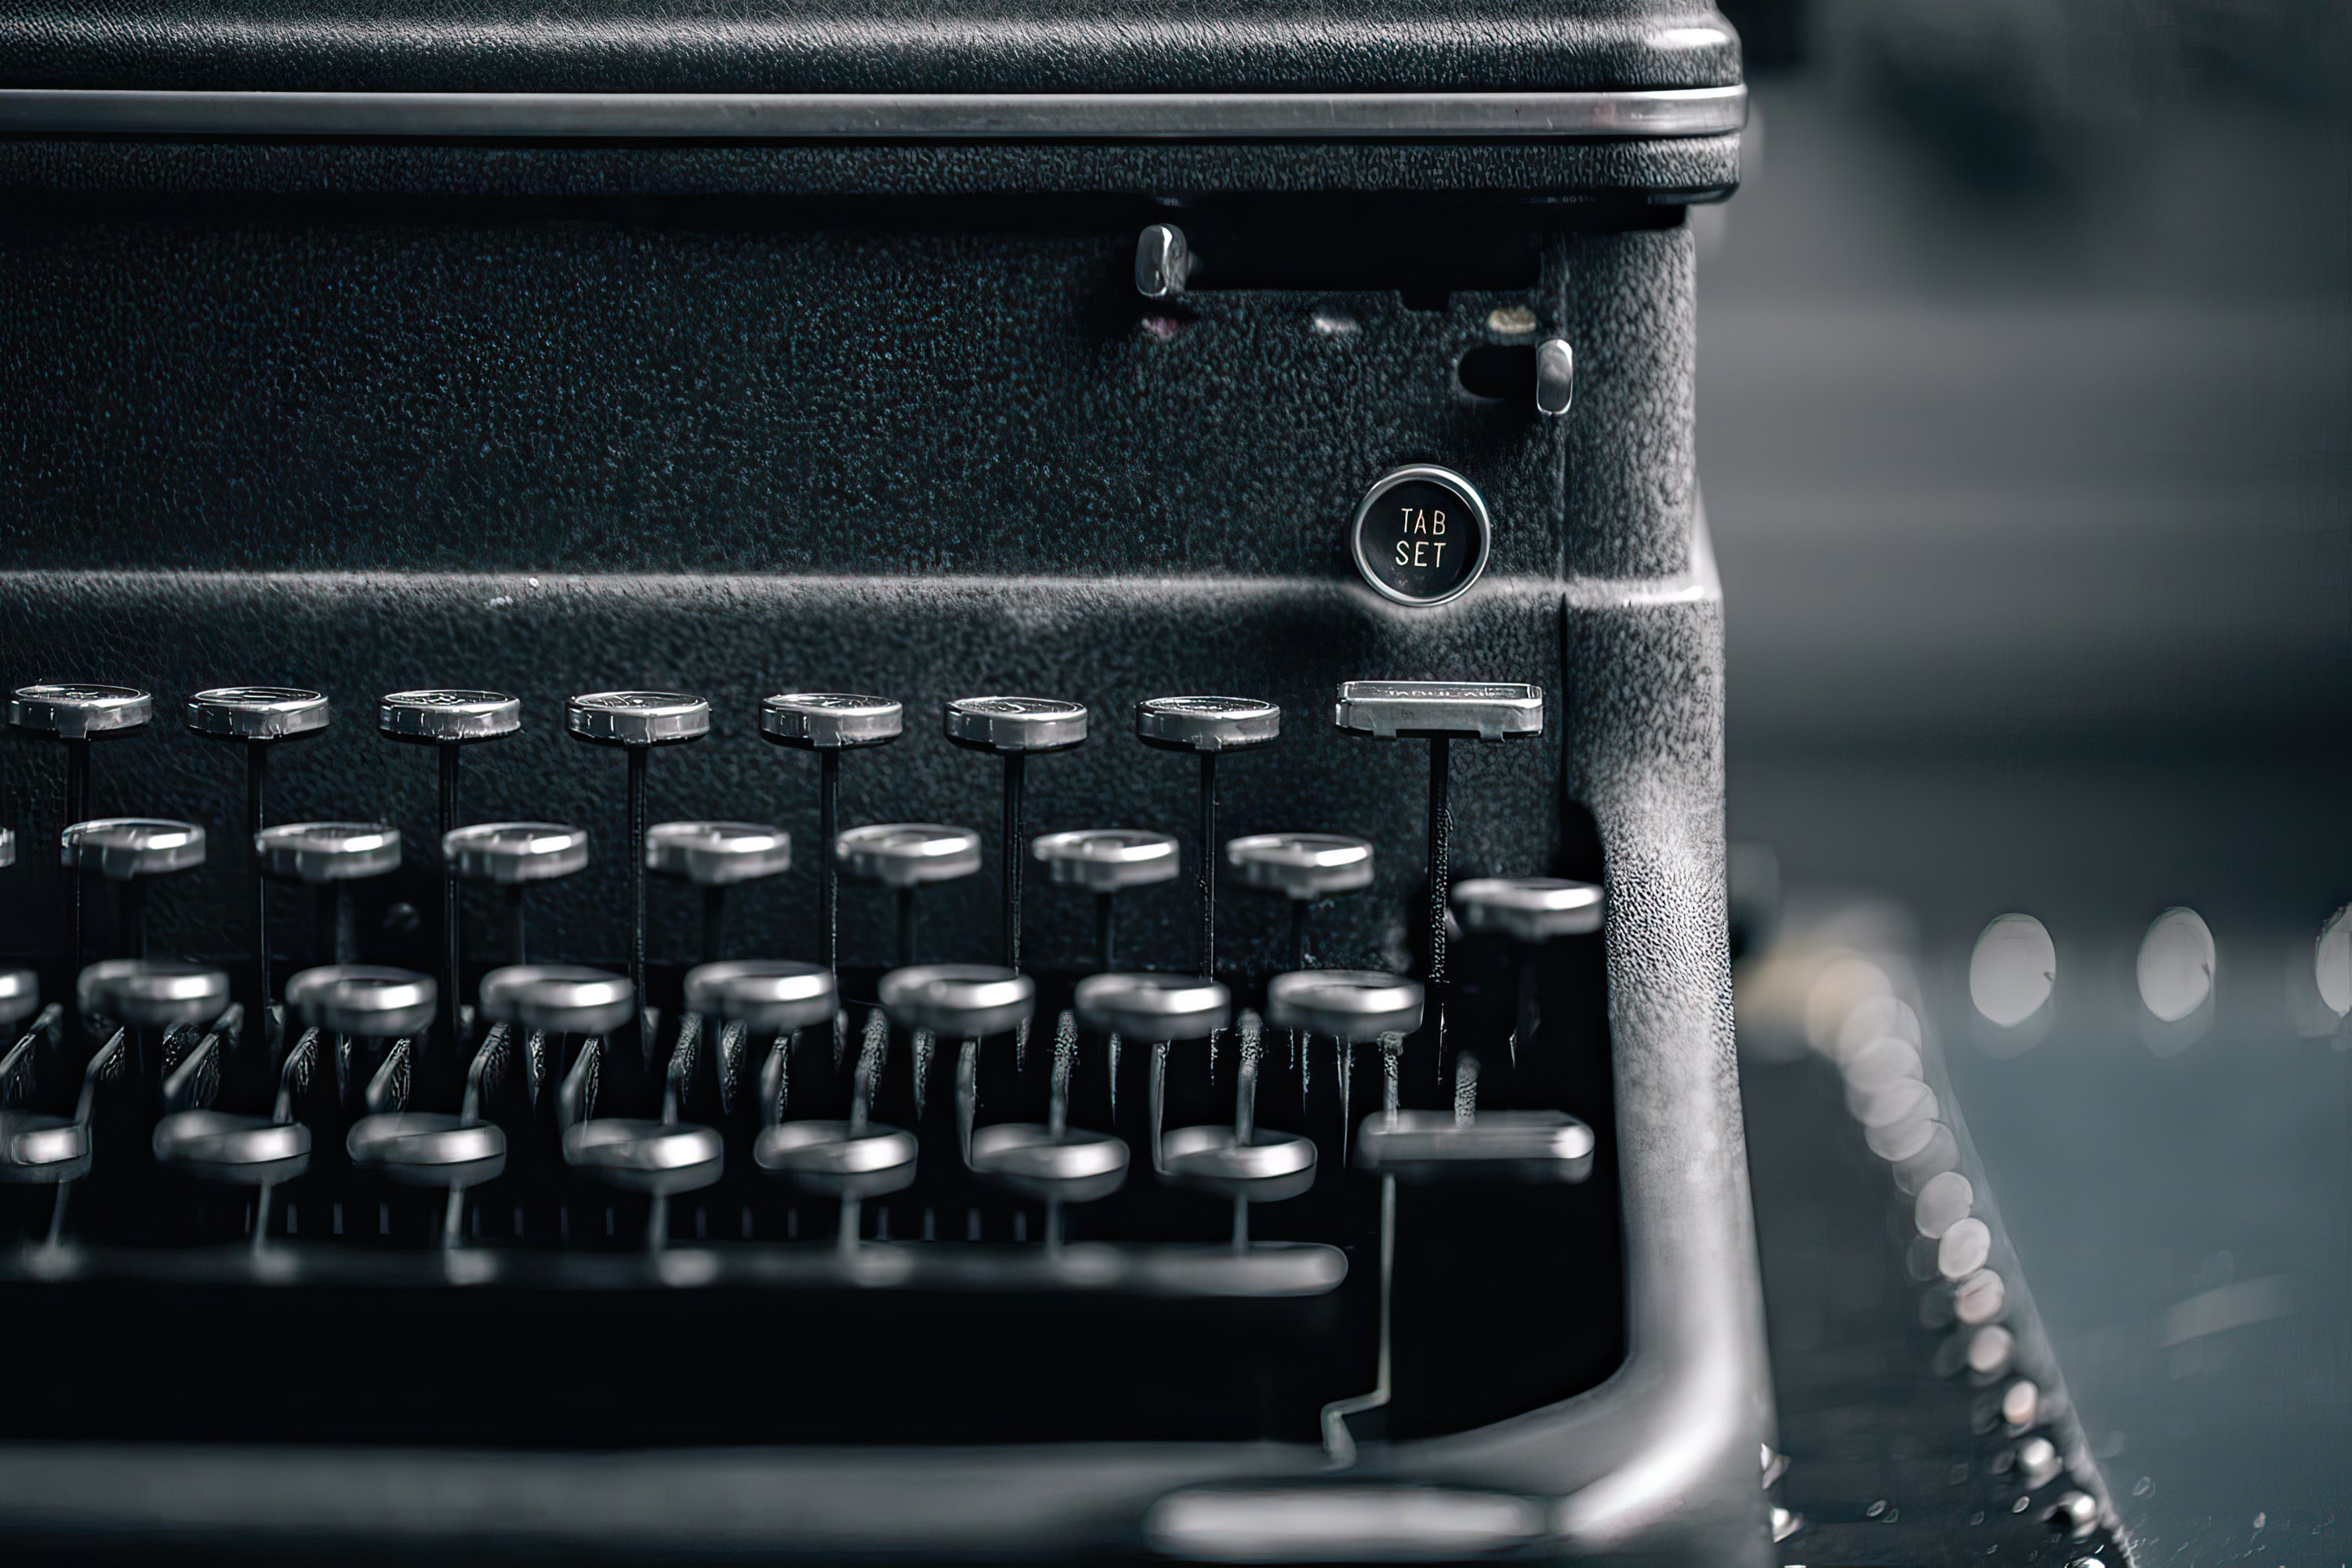 2022 True Story Showcase - Image of vintage typewriter